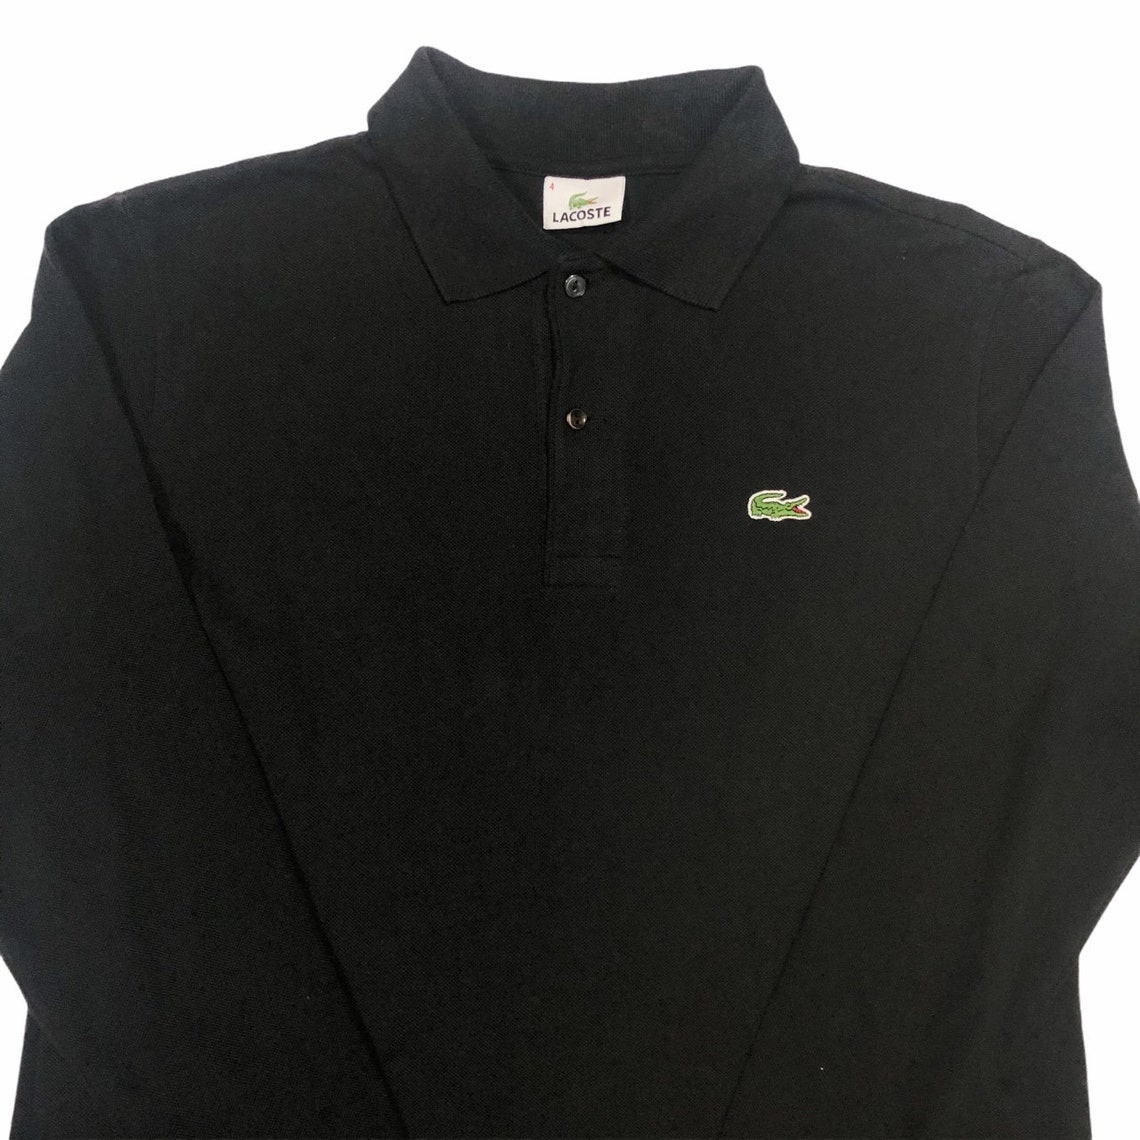 Vintage Lacoste Black Longsleeve Polo Shirt Size Small | Etsy